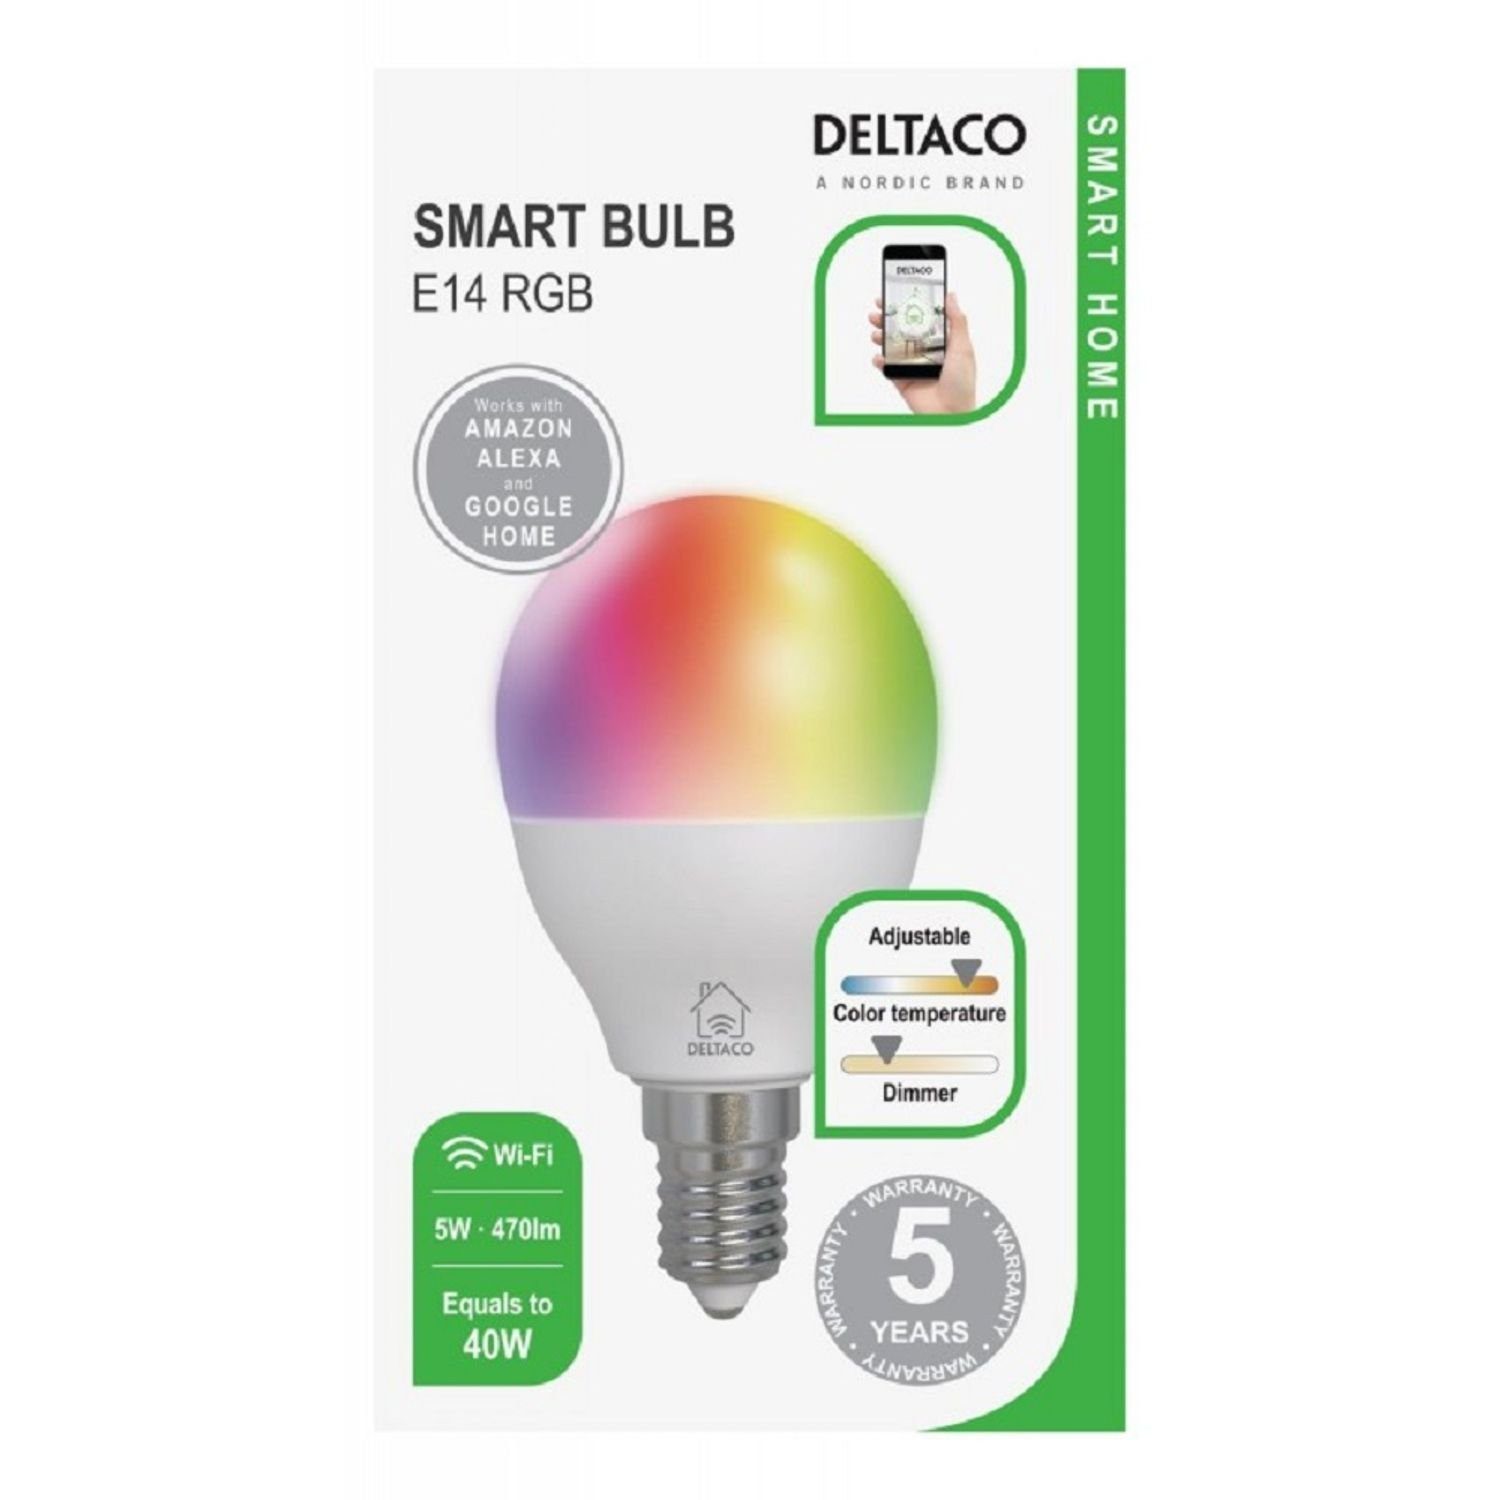 DELTACO SMART HOME LED-Leuchtmittel SH-LE14G45RGB 5 Jahre Herstellergarantie LED E14-Sockel inkl. dimmbar für RGB, Birne Smarte 5W E14